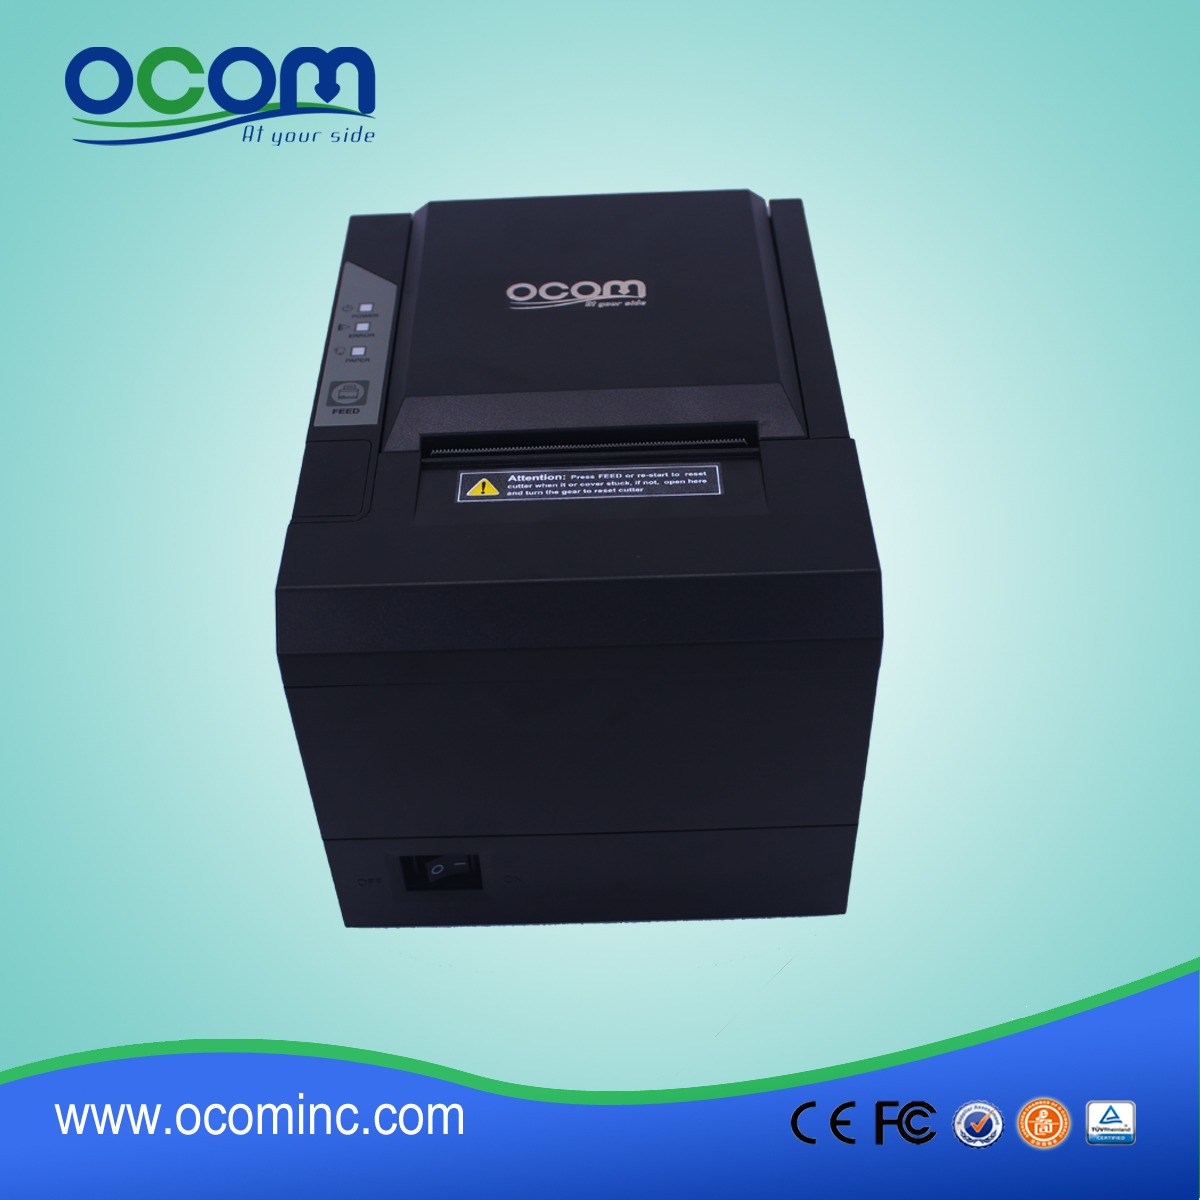 OCPP-80G βαρέως εκτύπωση νομοσχέδιο τιμή μηχάνημα φθηνά